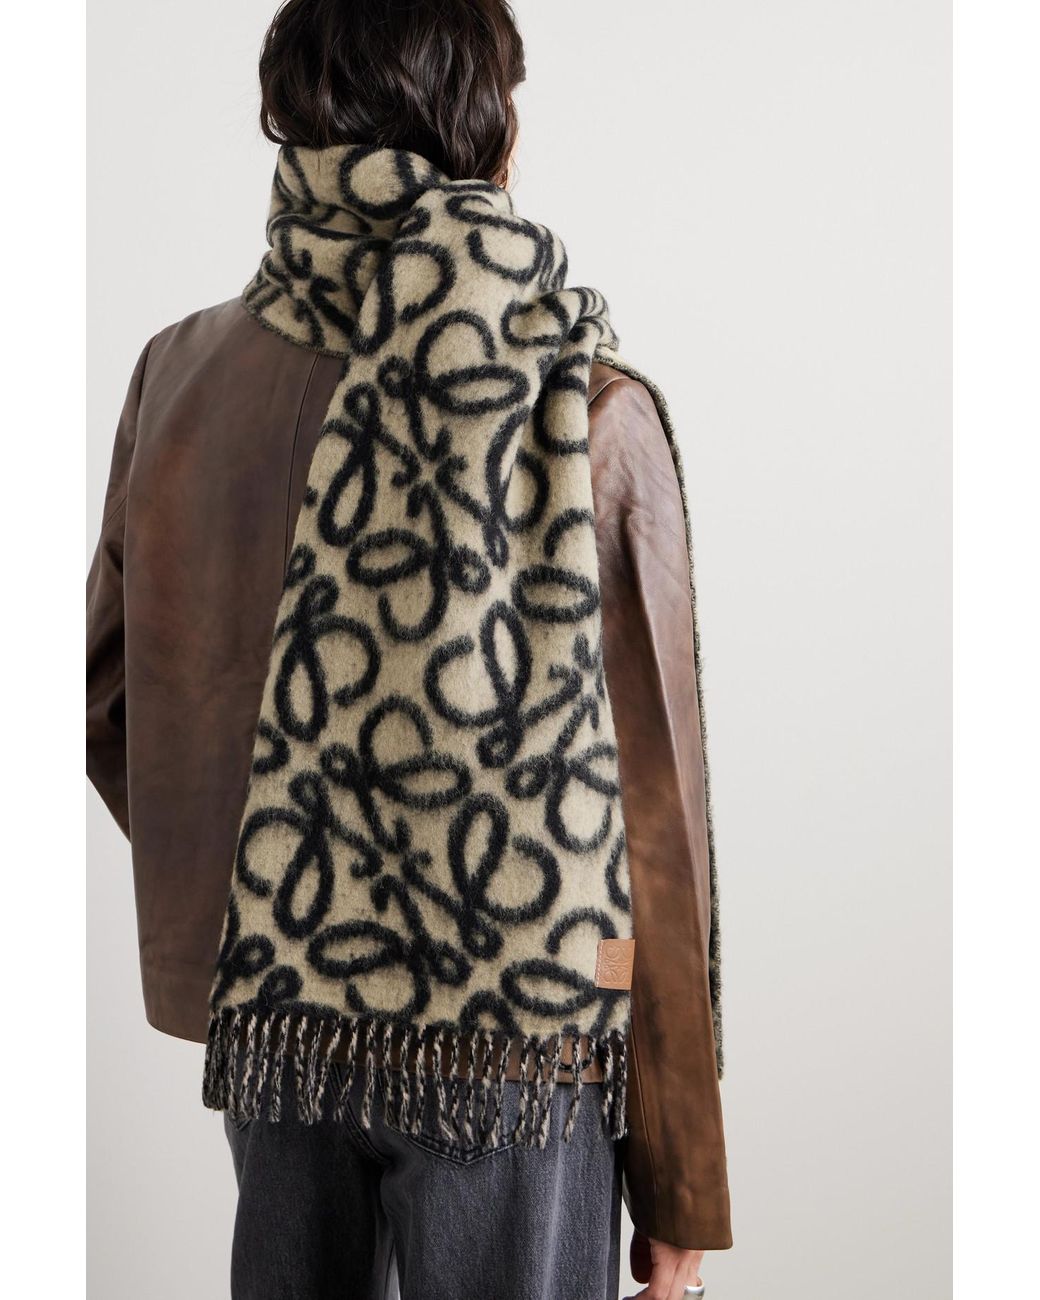 JACQUEMUS Fringed jacquard-knit wool scarf